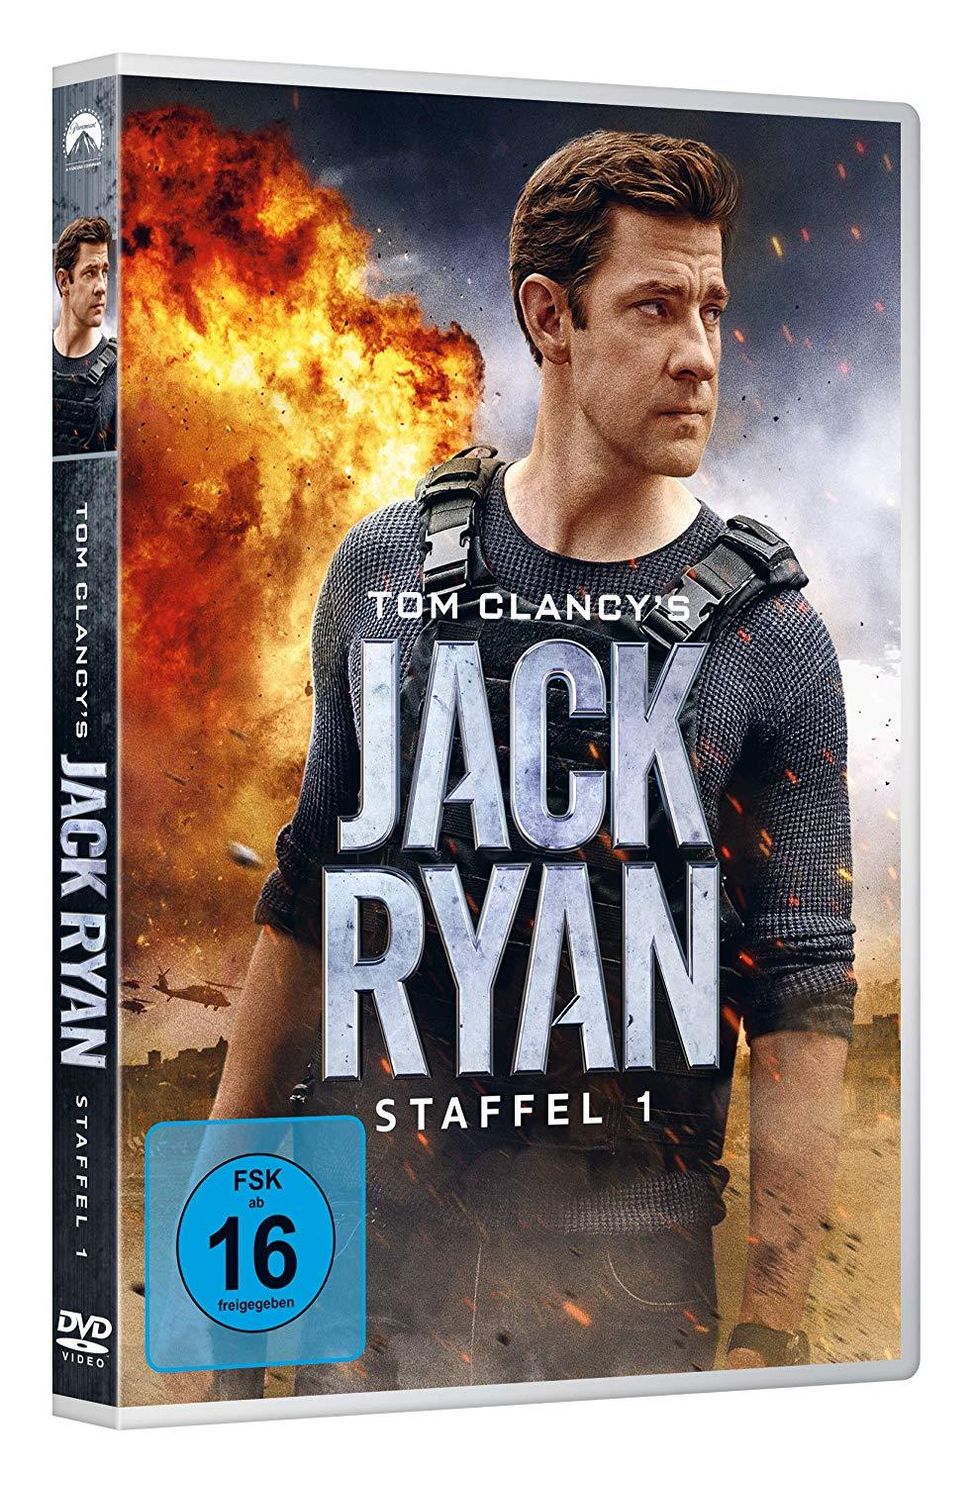 Tom Clancy's Jack Ryan - Staffel 1 DVD bei Weltbild.de bestellen